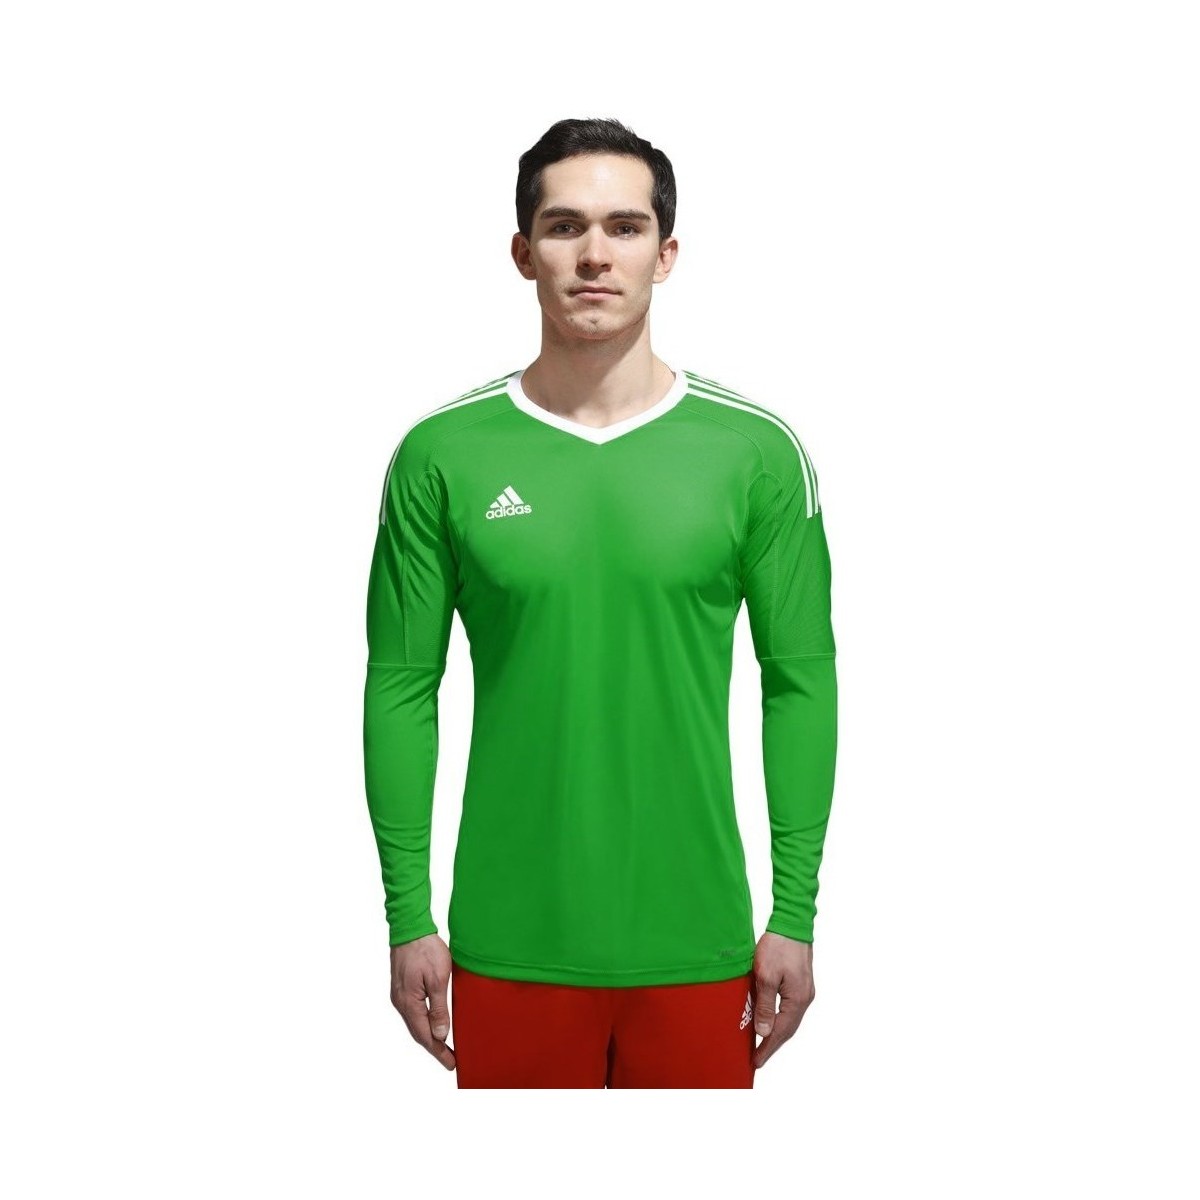 Textil Muži Trička s krátkým rukávem adidas Originals Z Adizero Goalkeeper Zelená